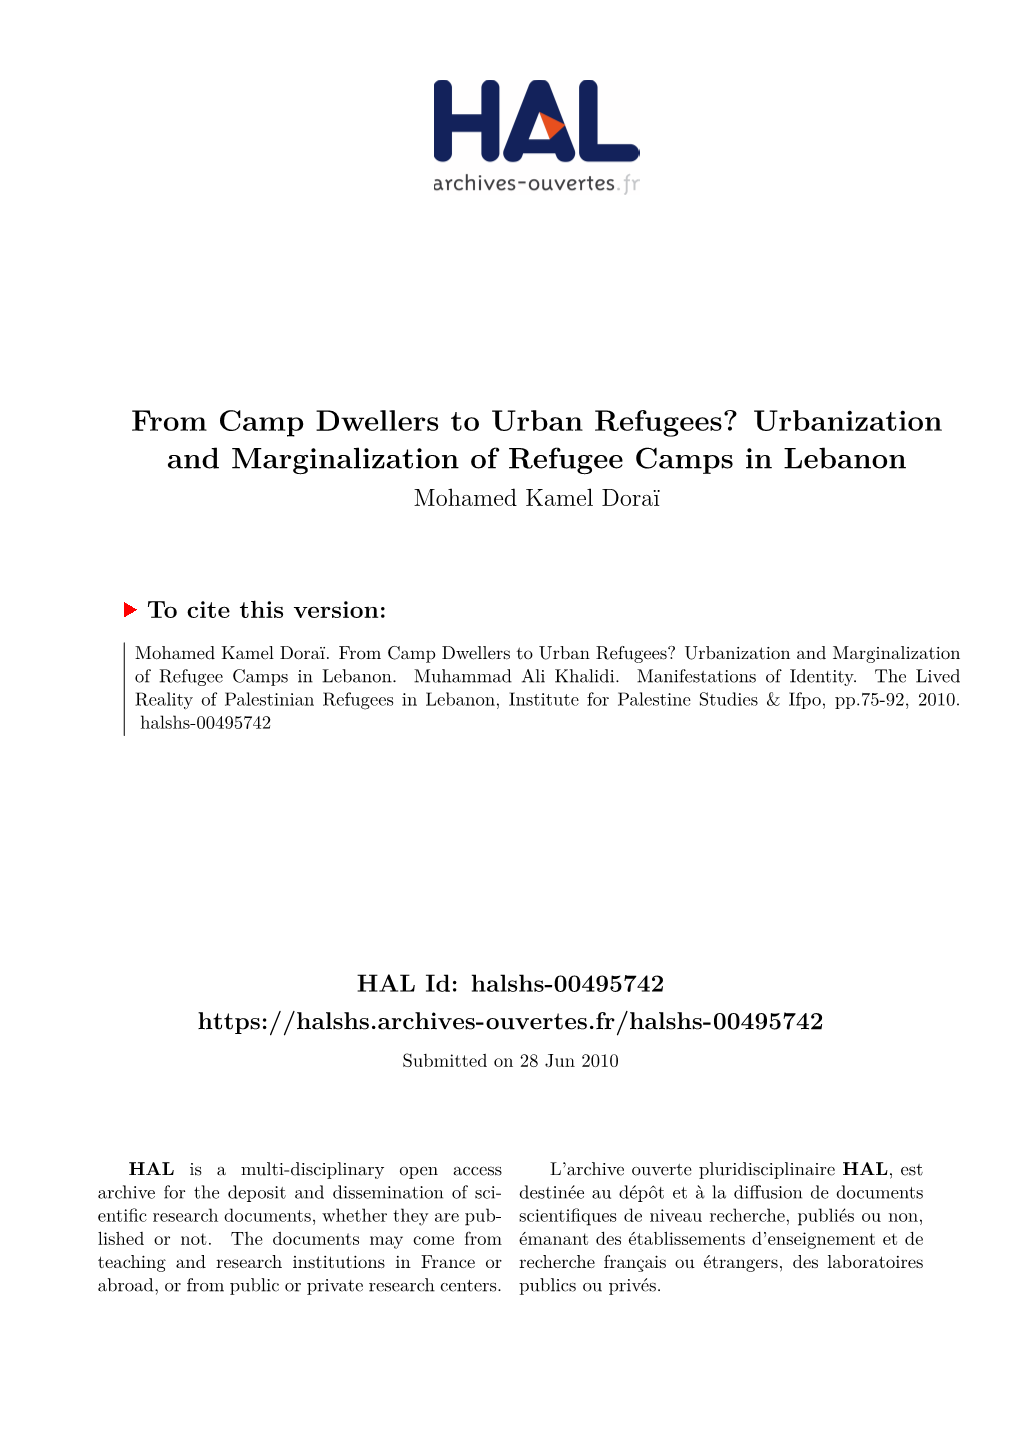 From Camp Dwellers to Urban Refugees? Urbanization and Marginalization of Refugee Camps in Lebanon Mohamed Kamel Doraï